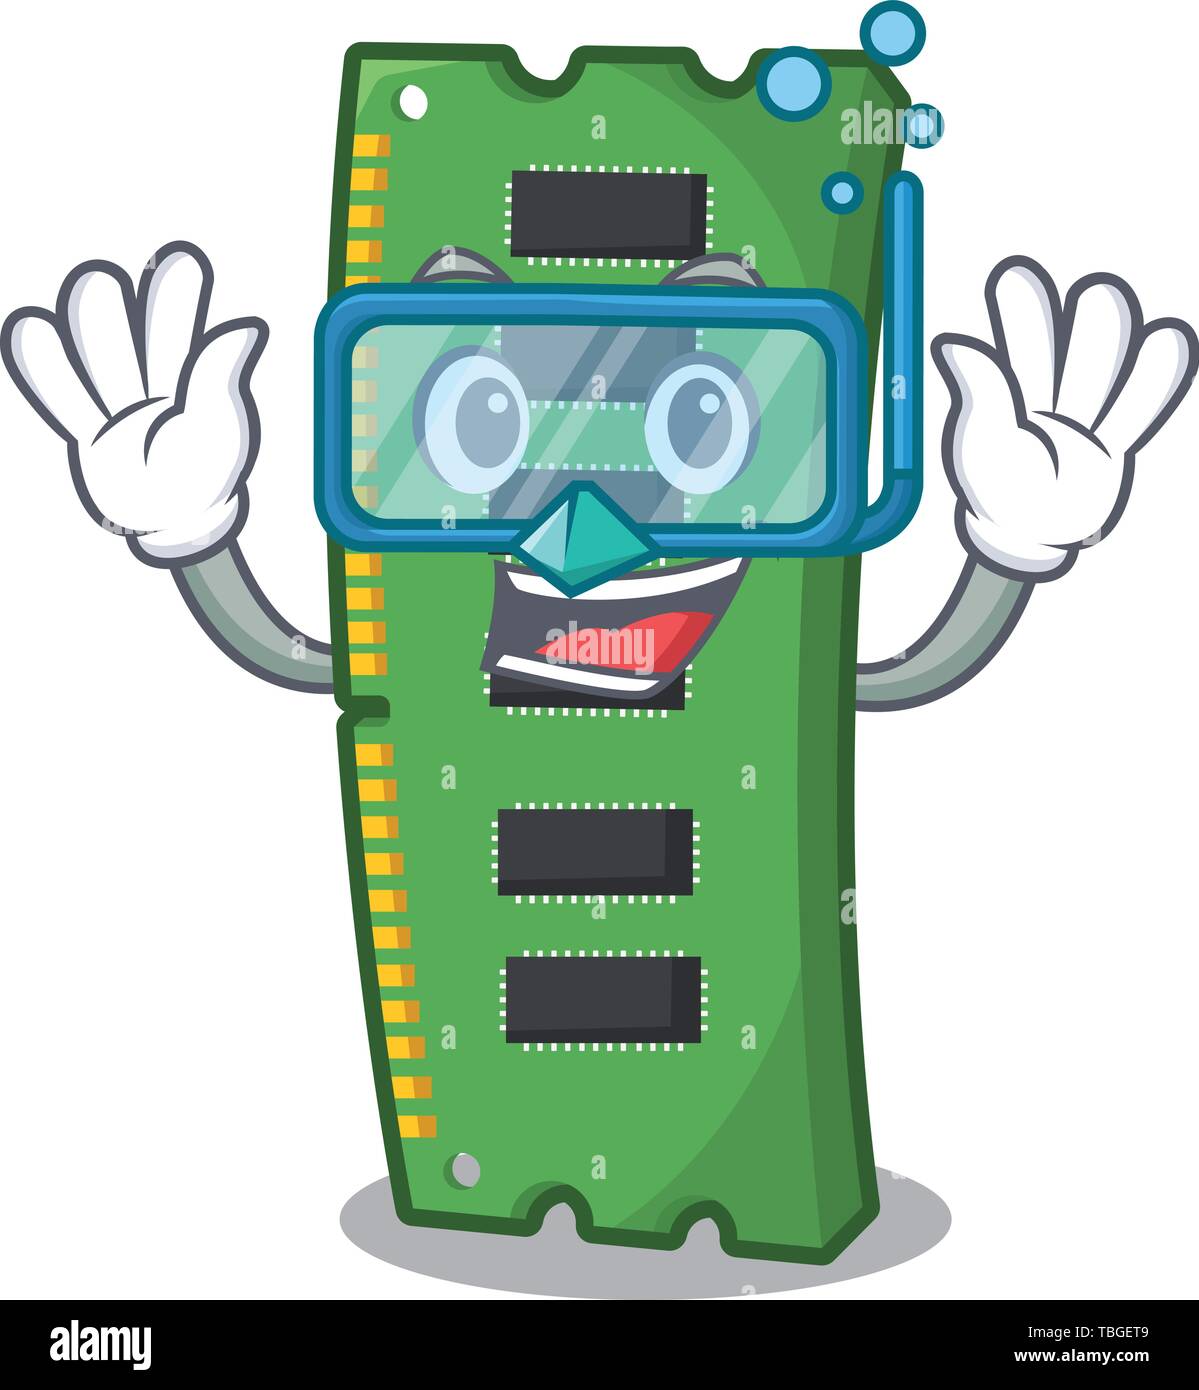 Diving RAM memory card the mascot shape Stock Vector